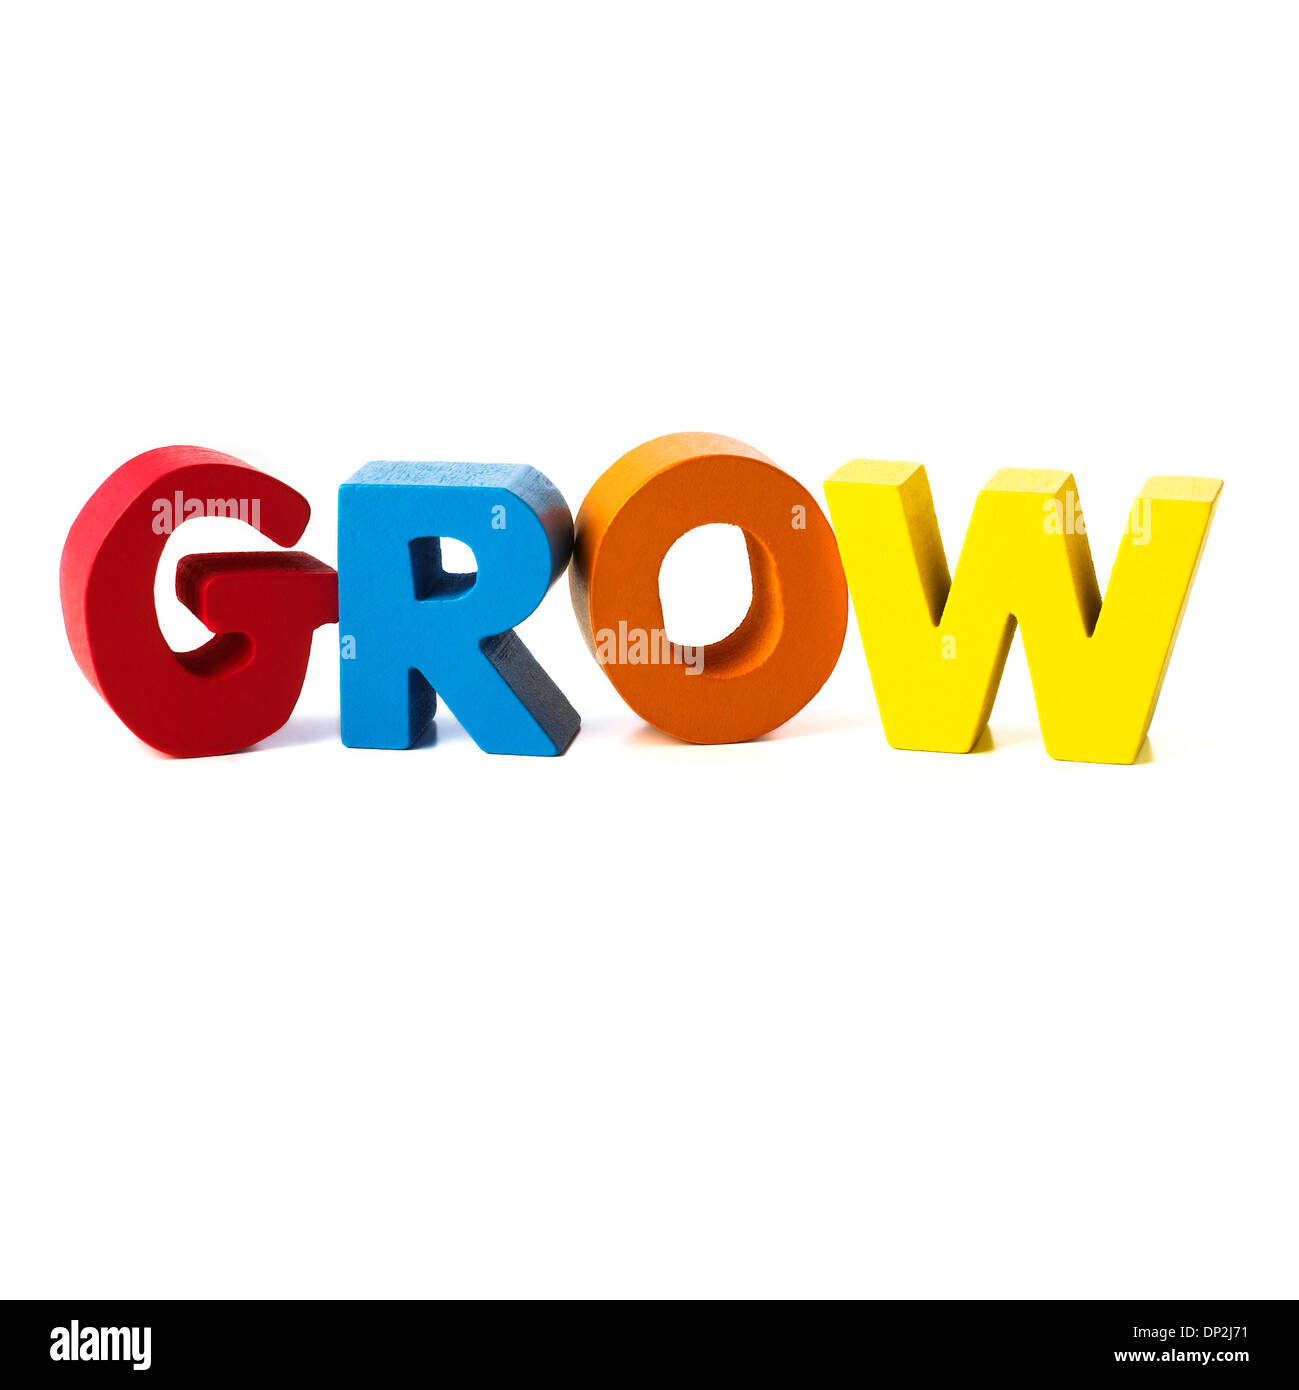 Growth, conceptual image Stock Photo